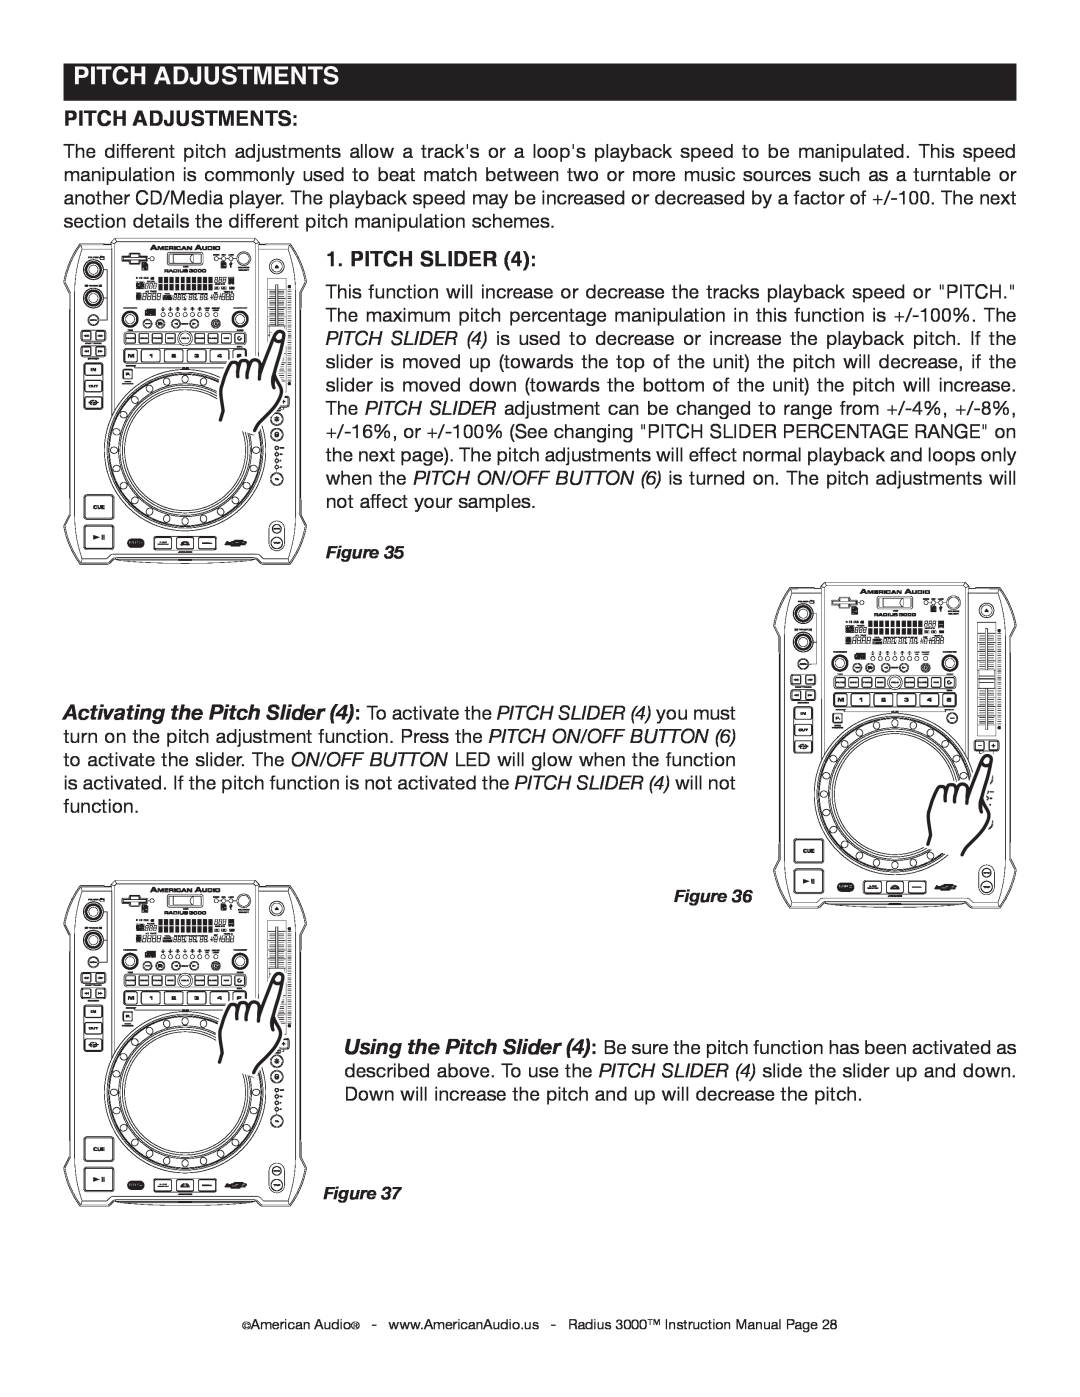 American Audio Radius 3000 manual Pitch adjustments, Pitch Slider 